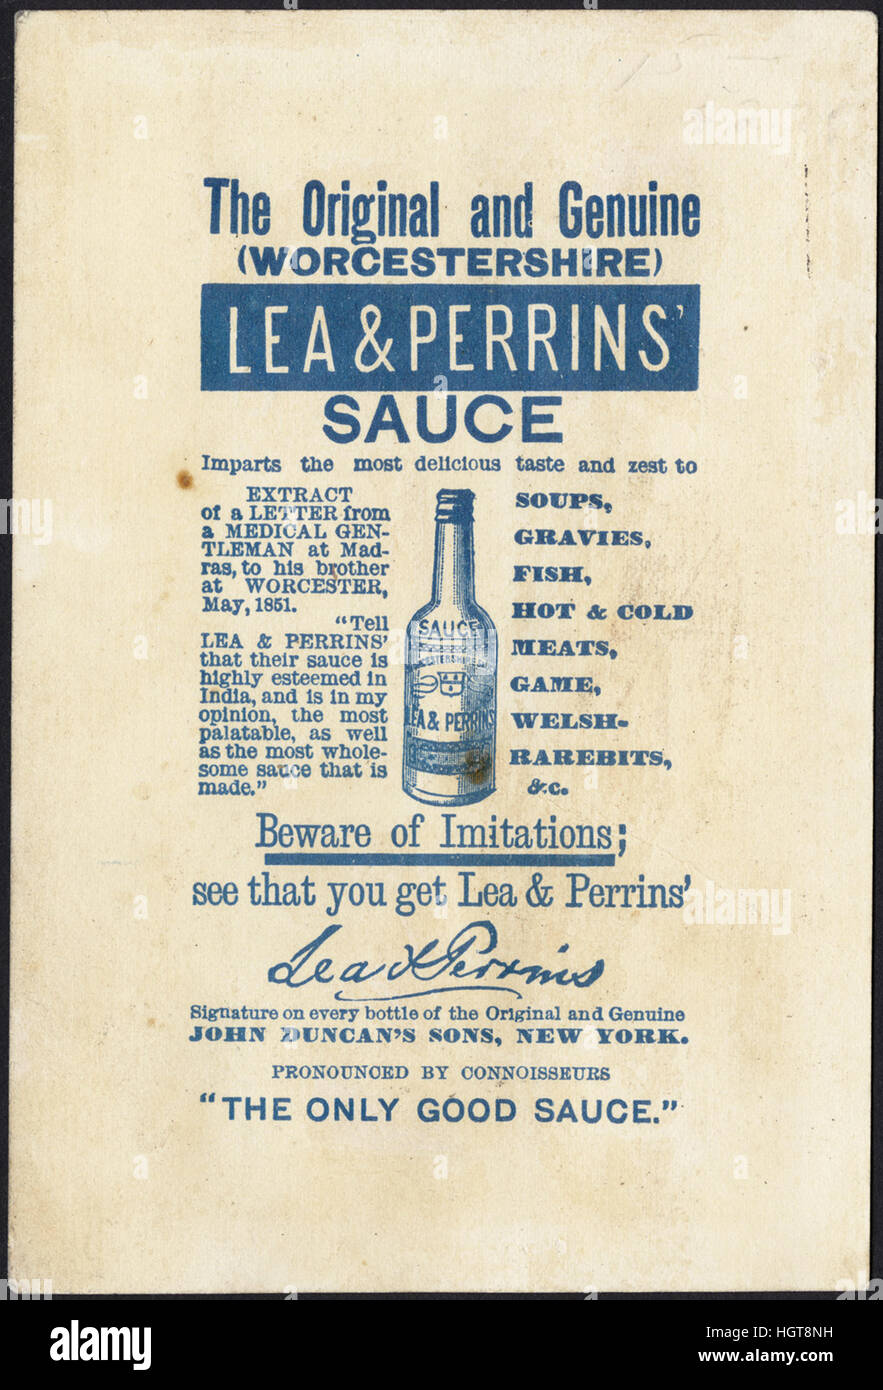 Lea & Perrins Sauce [zurück] - Lebensmittel-Handel-Karte Stockfoto